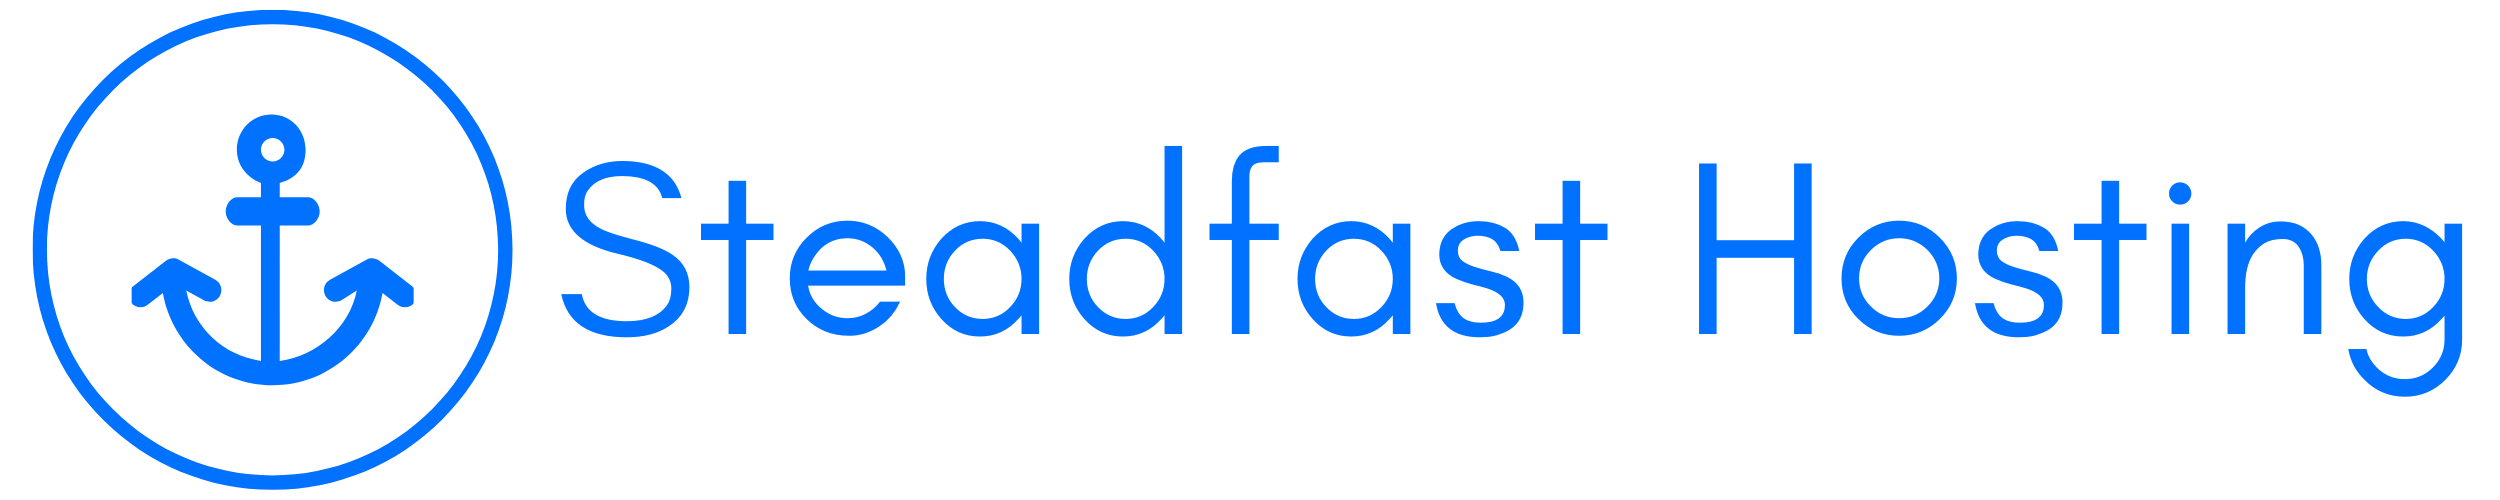 Steadfast Hosting Logo